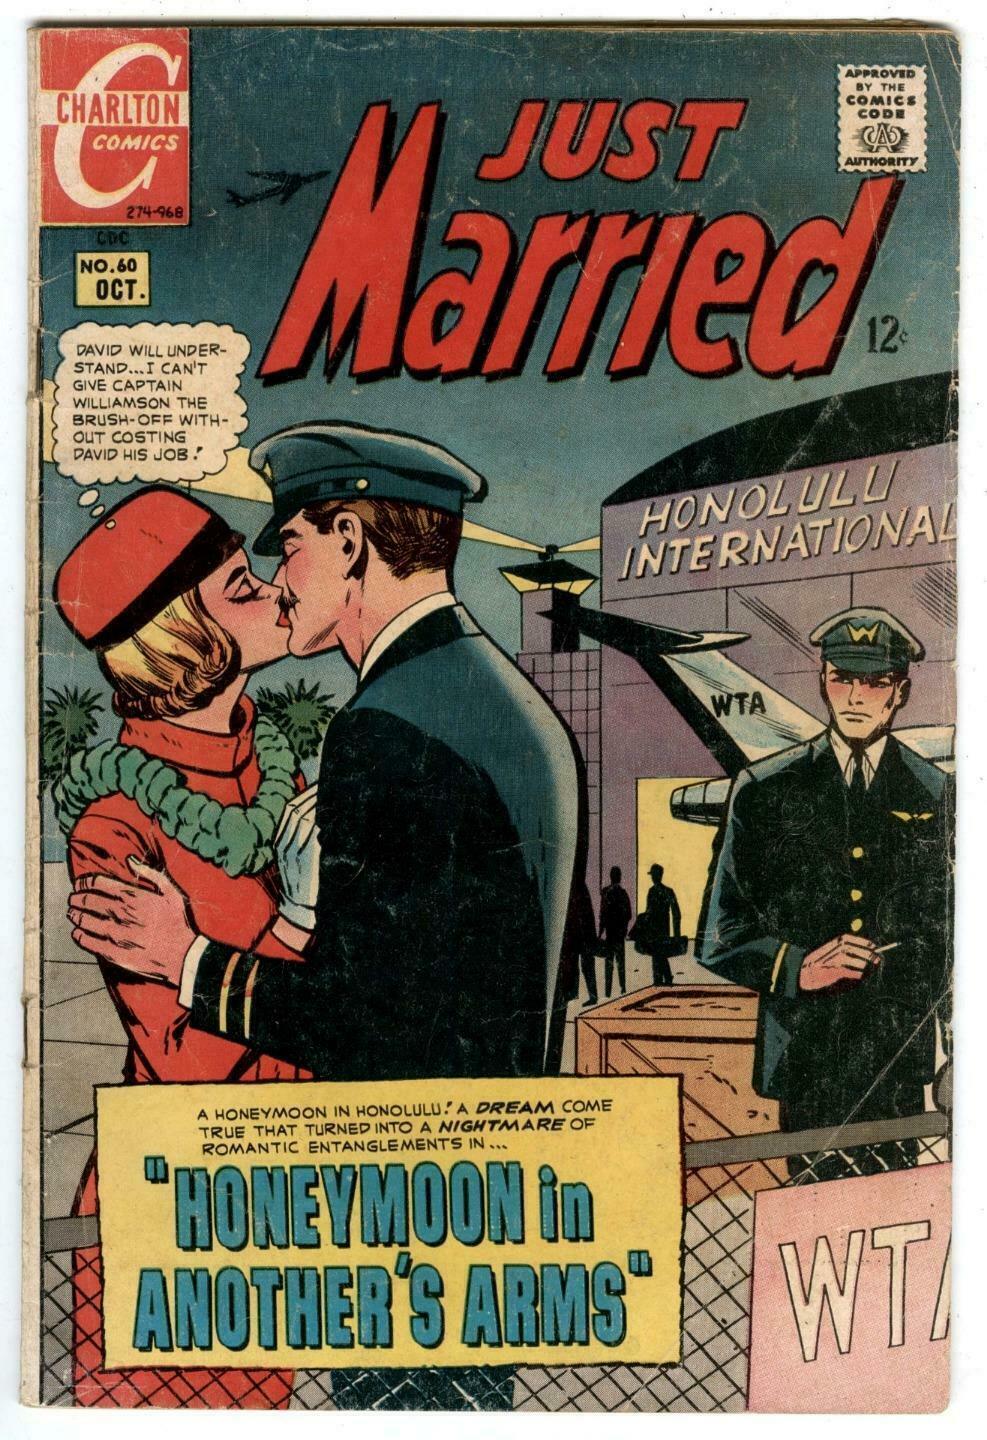 Just Married #60 1968- Charlton- Honolulu Hawaii   Air Pilot love triangle cover